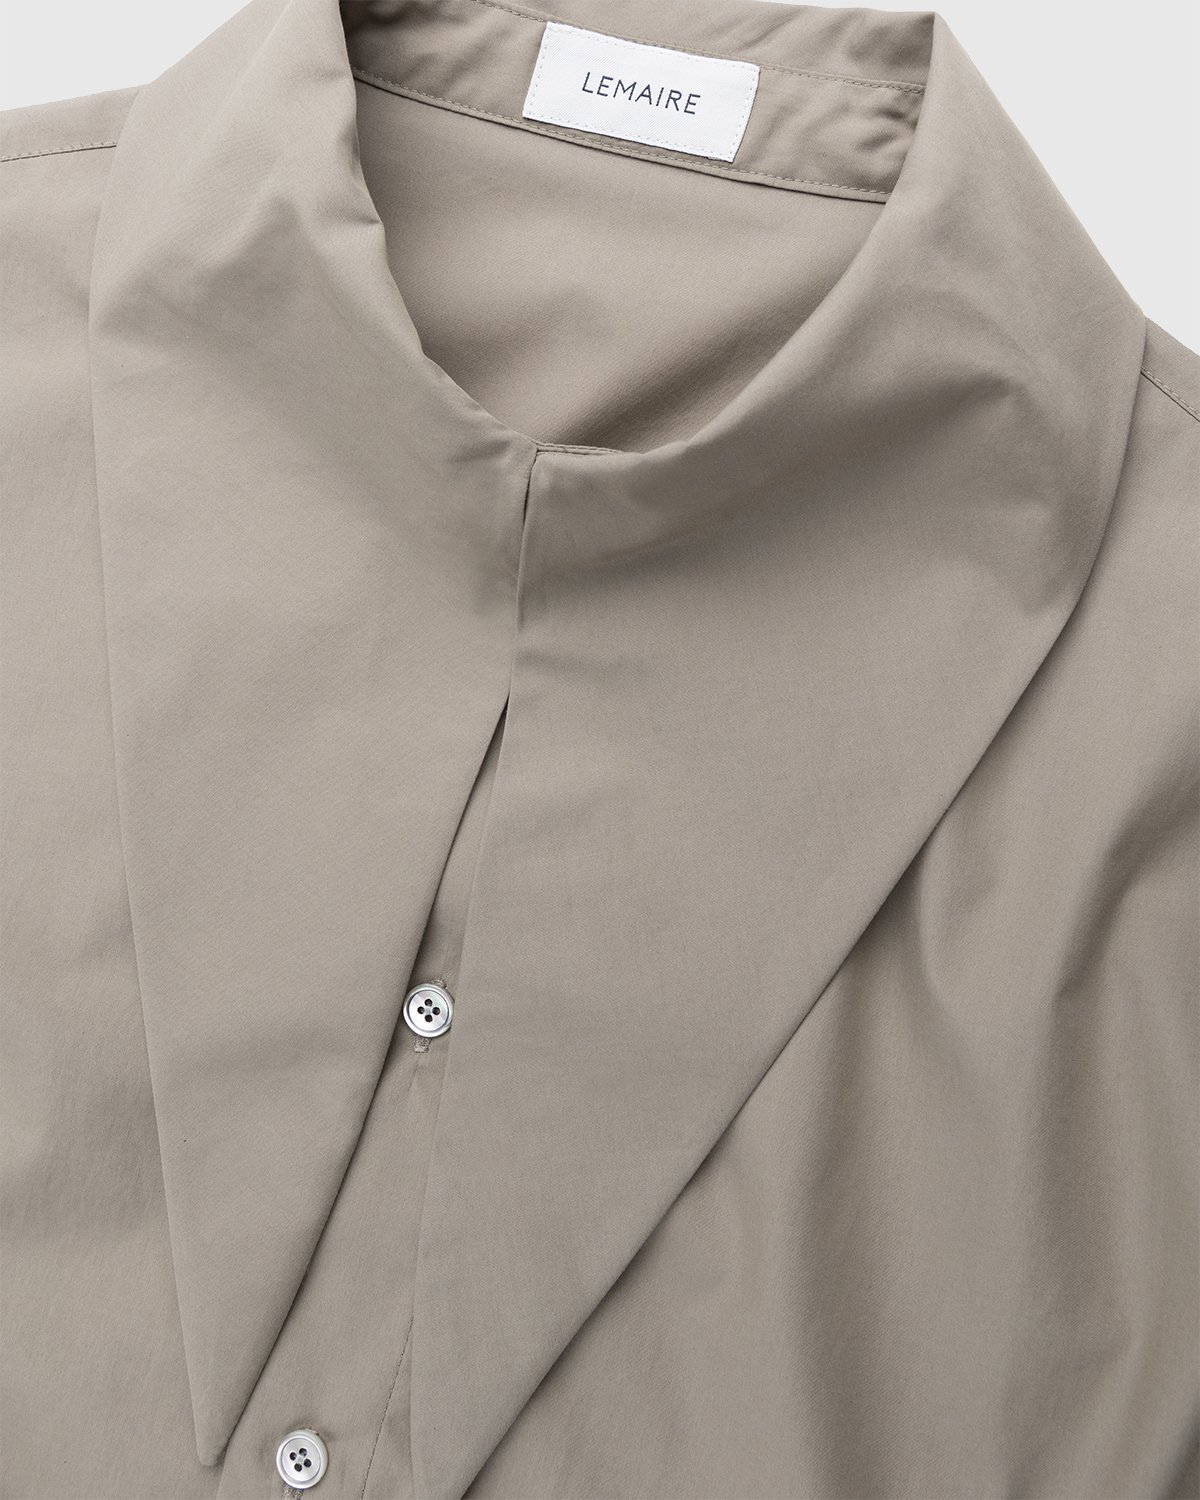 Lemaire - Tie Neck Shirt Greige - Clothing - Beige - Image 5